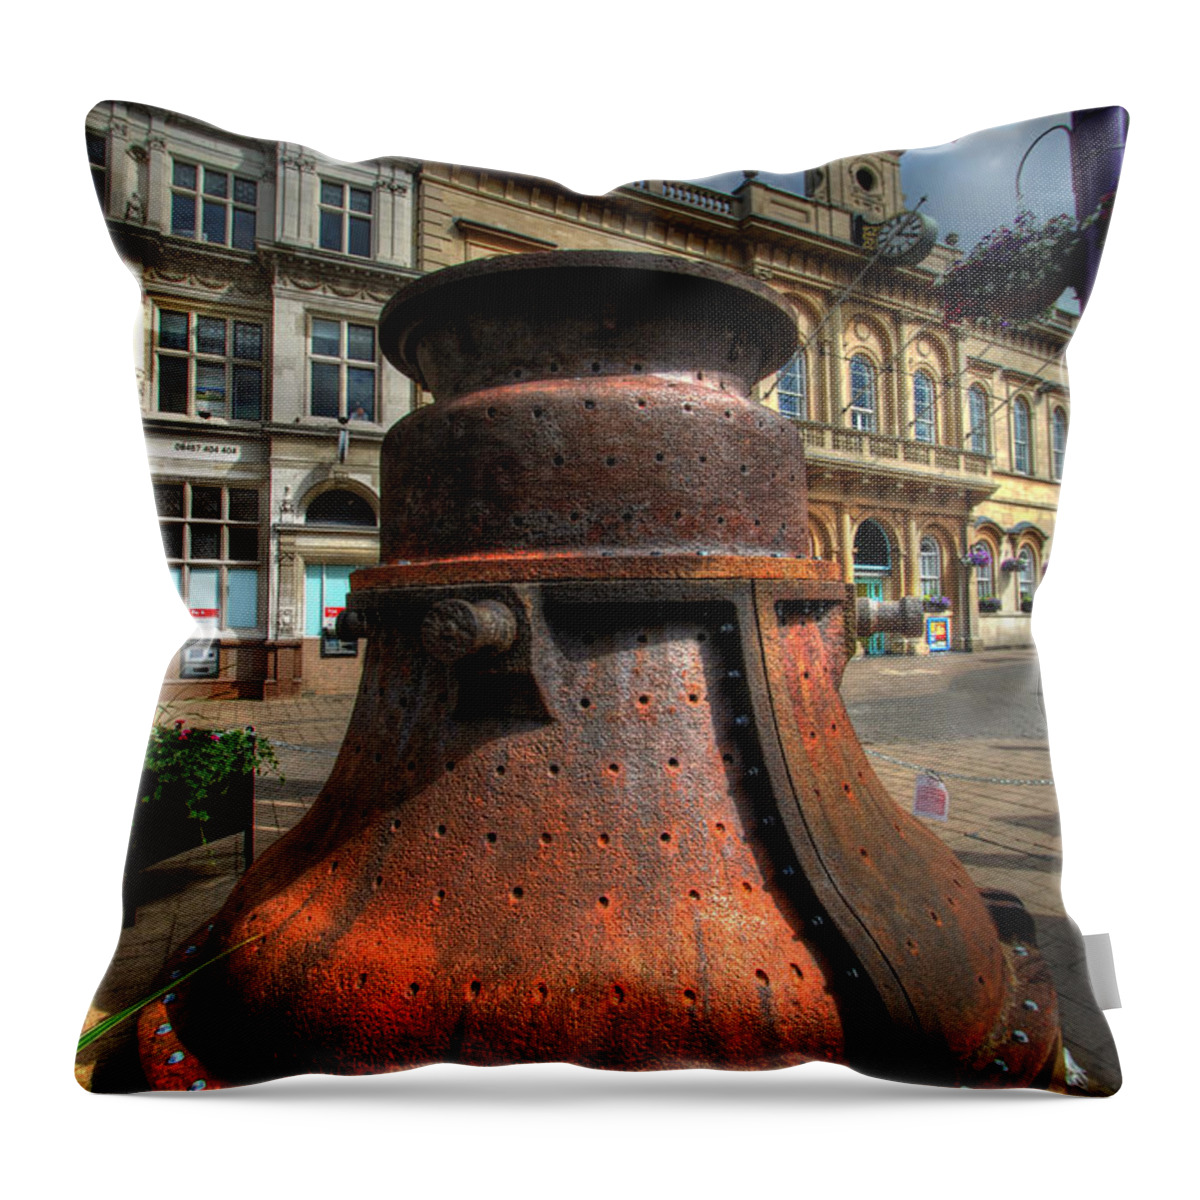  Yhun Suarez Throw Pillow featuring the photograph Great Paul's Bell Mould by Yhun Suarez